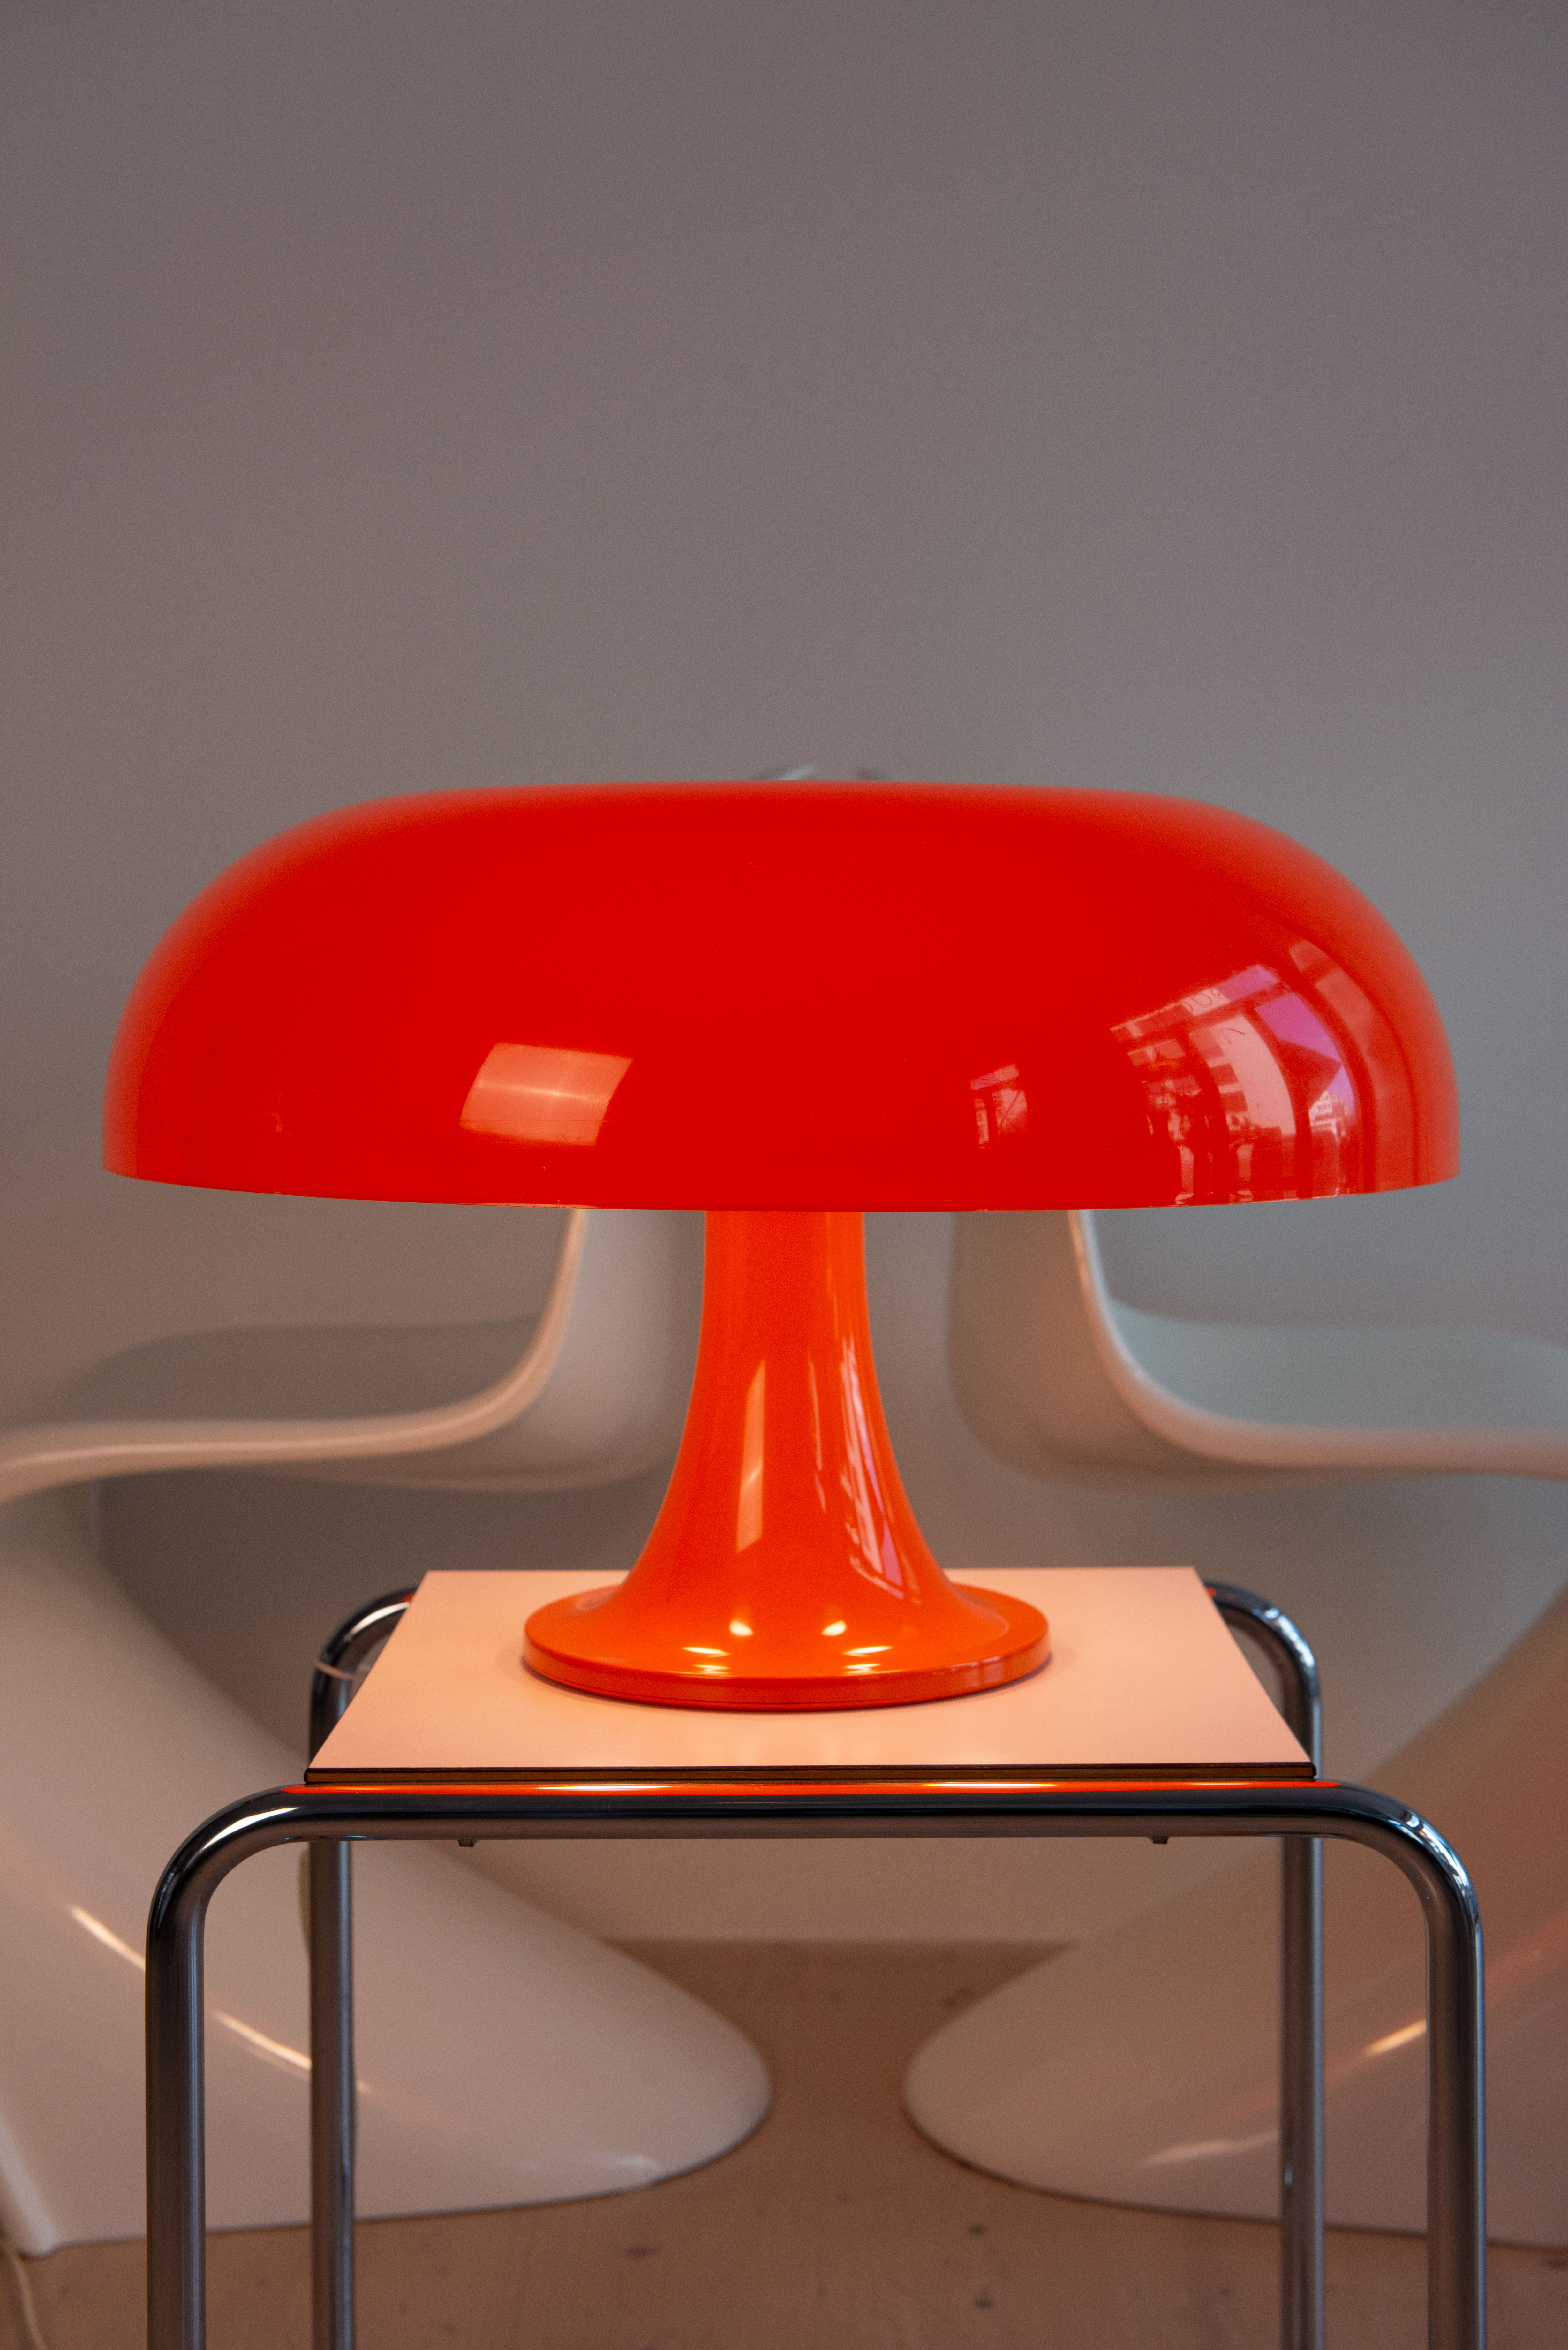 Nesso Lamp by Giancarlo Mattioli for Artemide, Italy, 1960s. For sale at heyday möbel, Grubenstrasse 19, 8045 Zürich, Switzerland. Mid-Century Modern Furniture and Other Stuff.